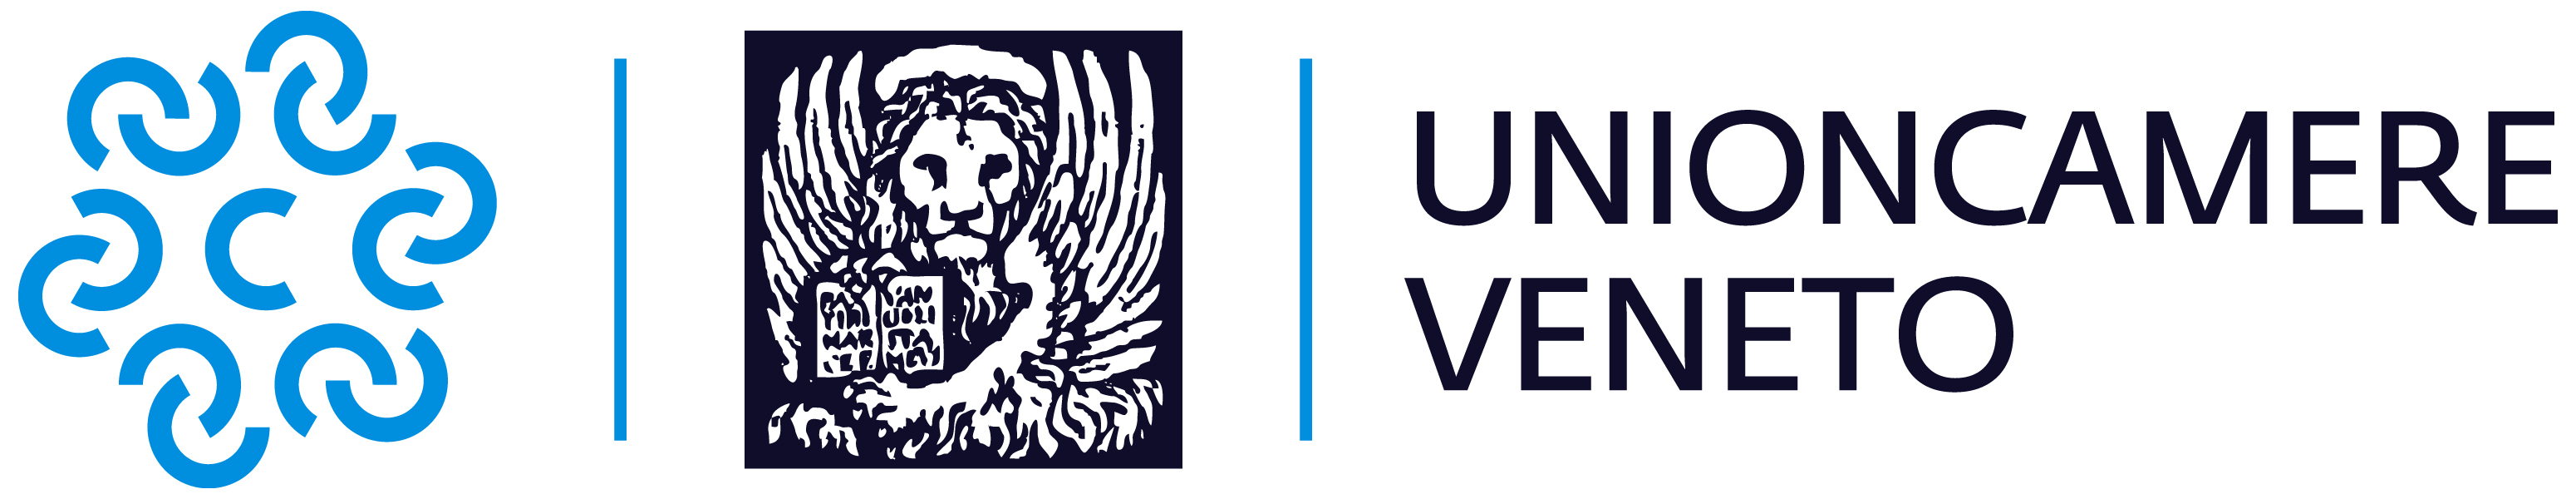 Unioncamere Veneto Logo